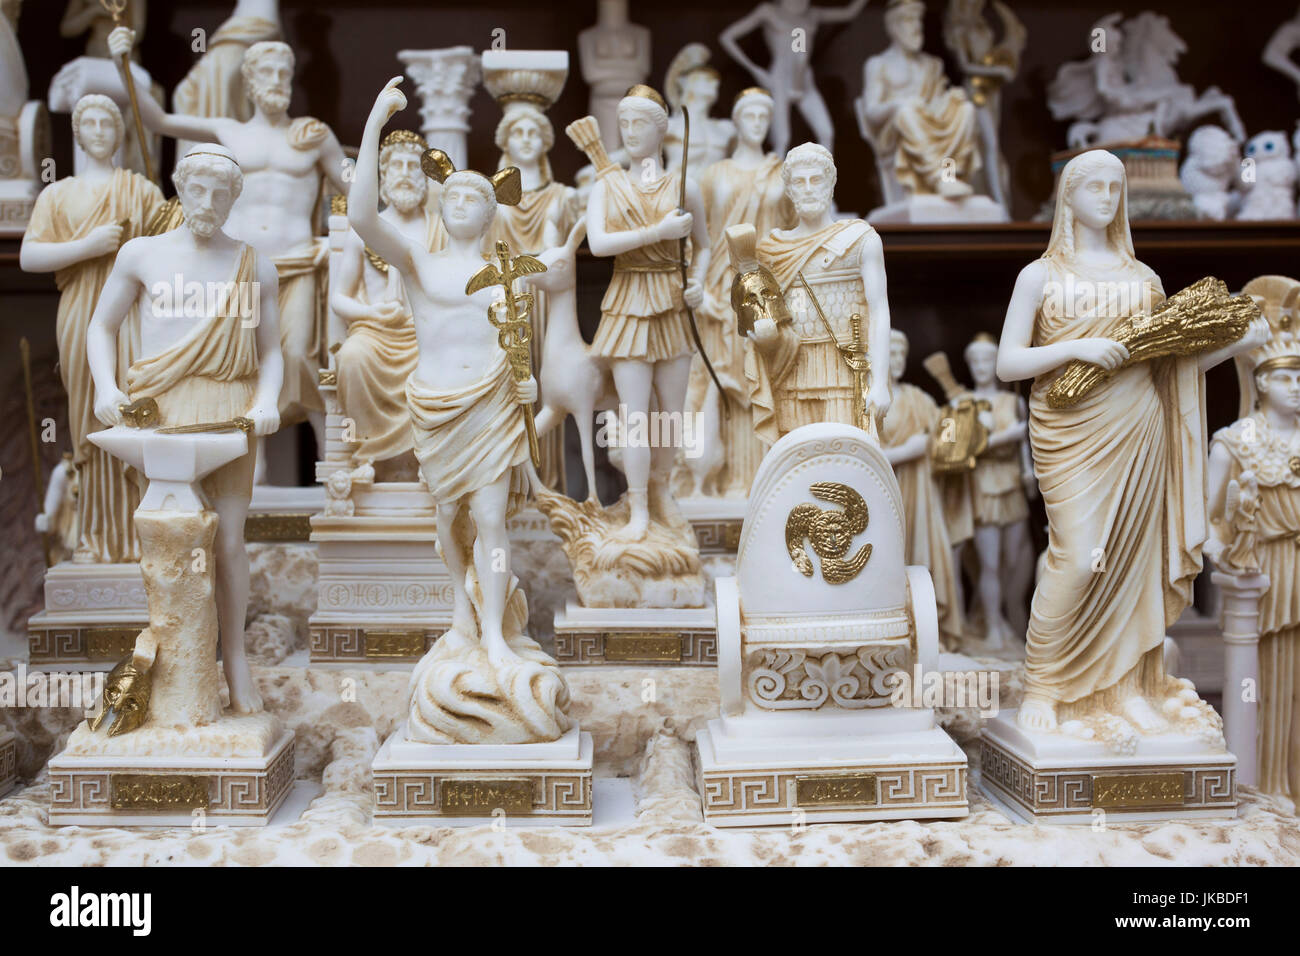 Greece, Epirus Region, Parga, souvenir figures of figures from Greek mythology Stock Photo